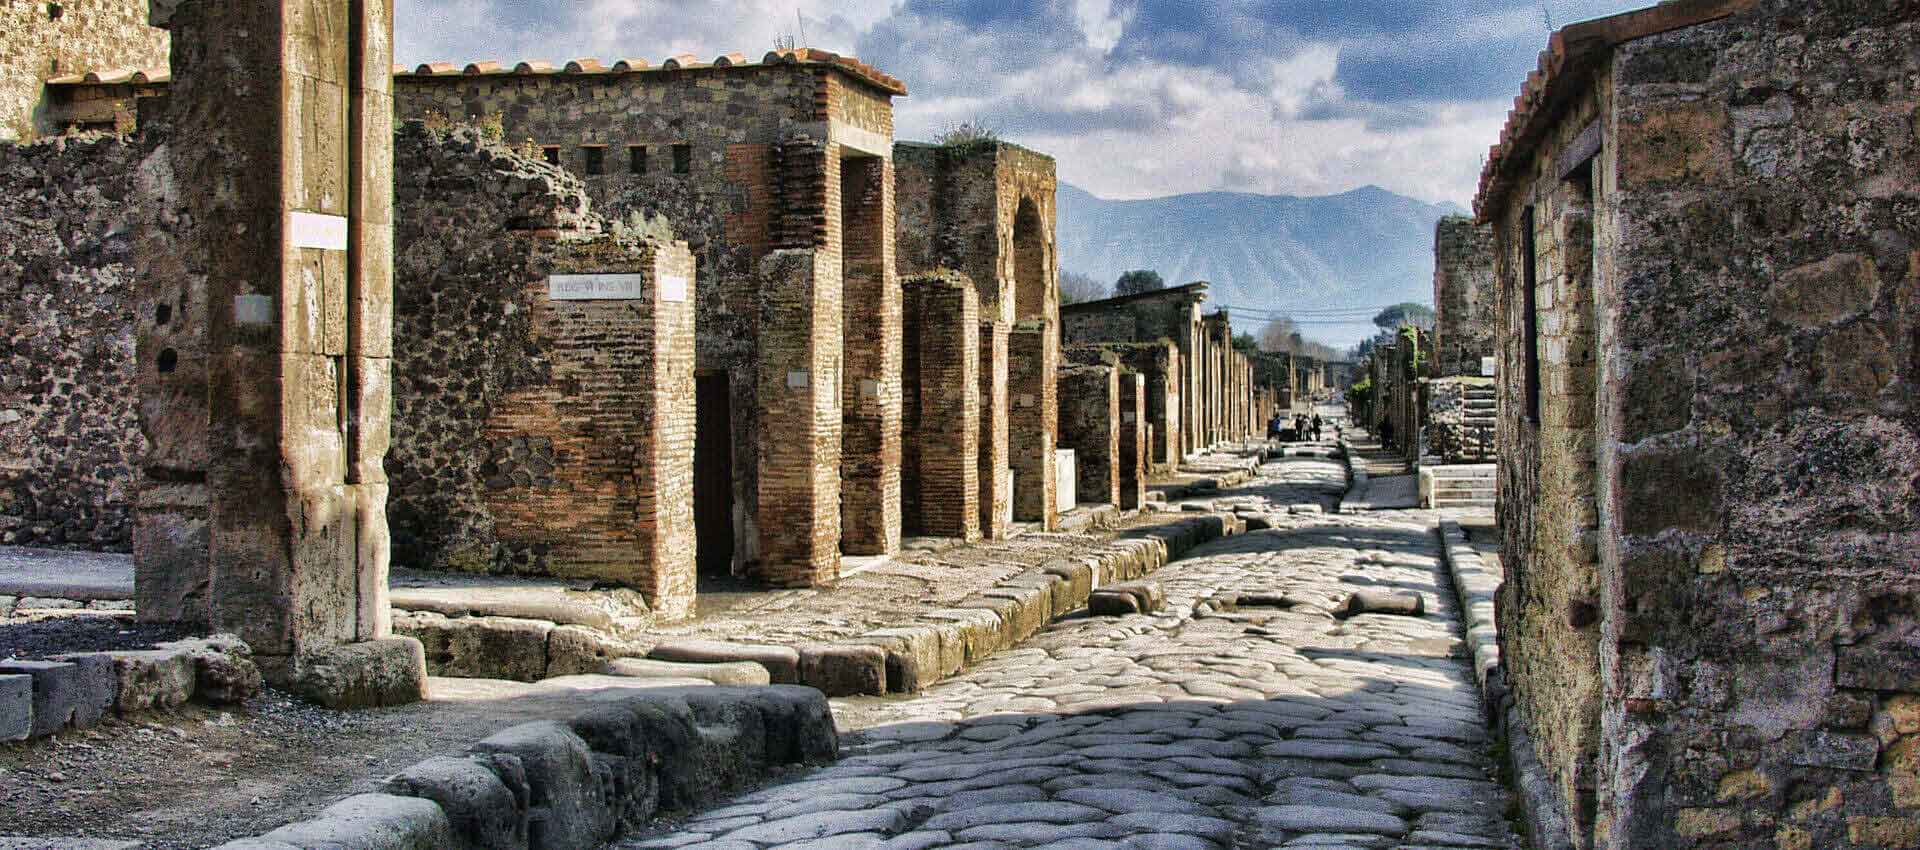 Ancient street in Pompeii